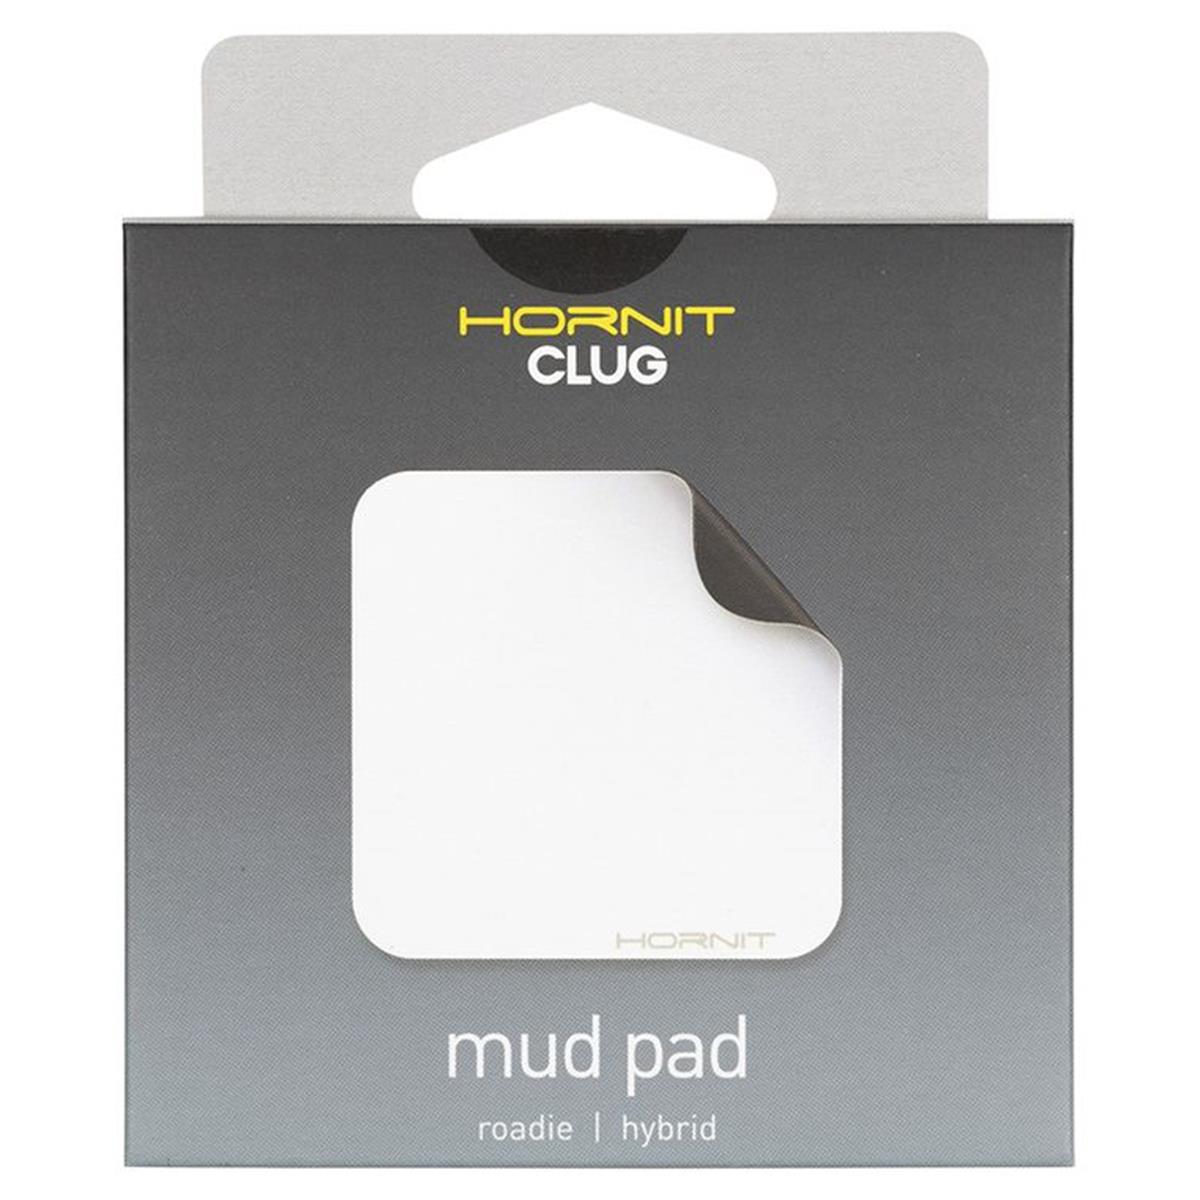 Hornit Ruban de Protection Clug Mud Pad S 76,2 x 76,2 mm